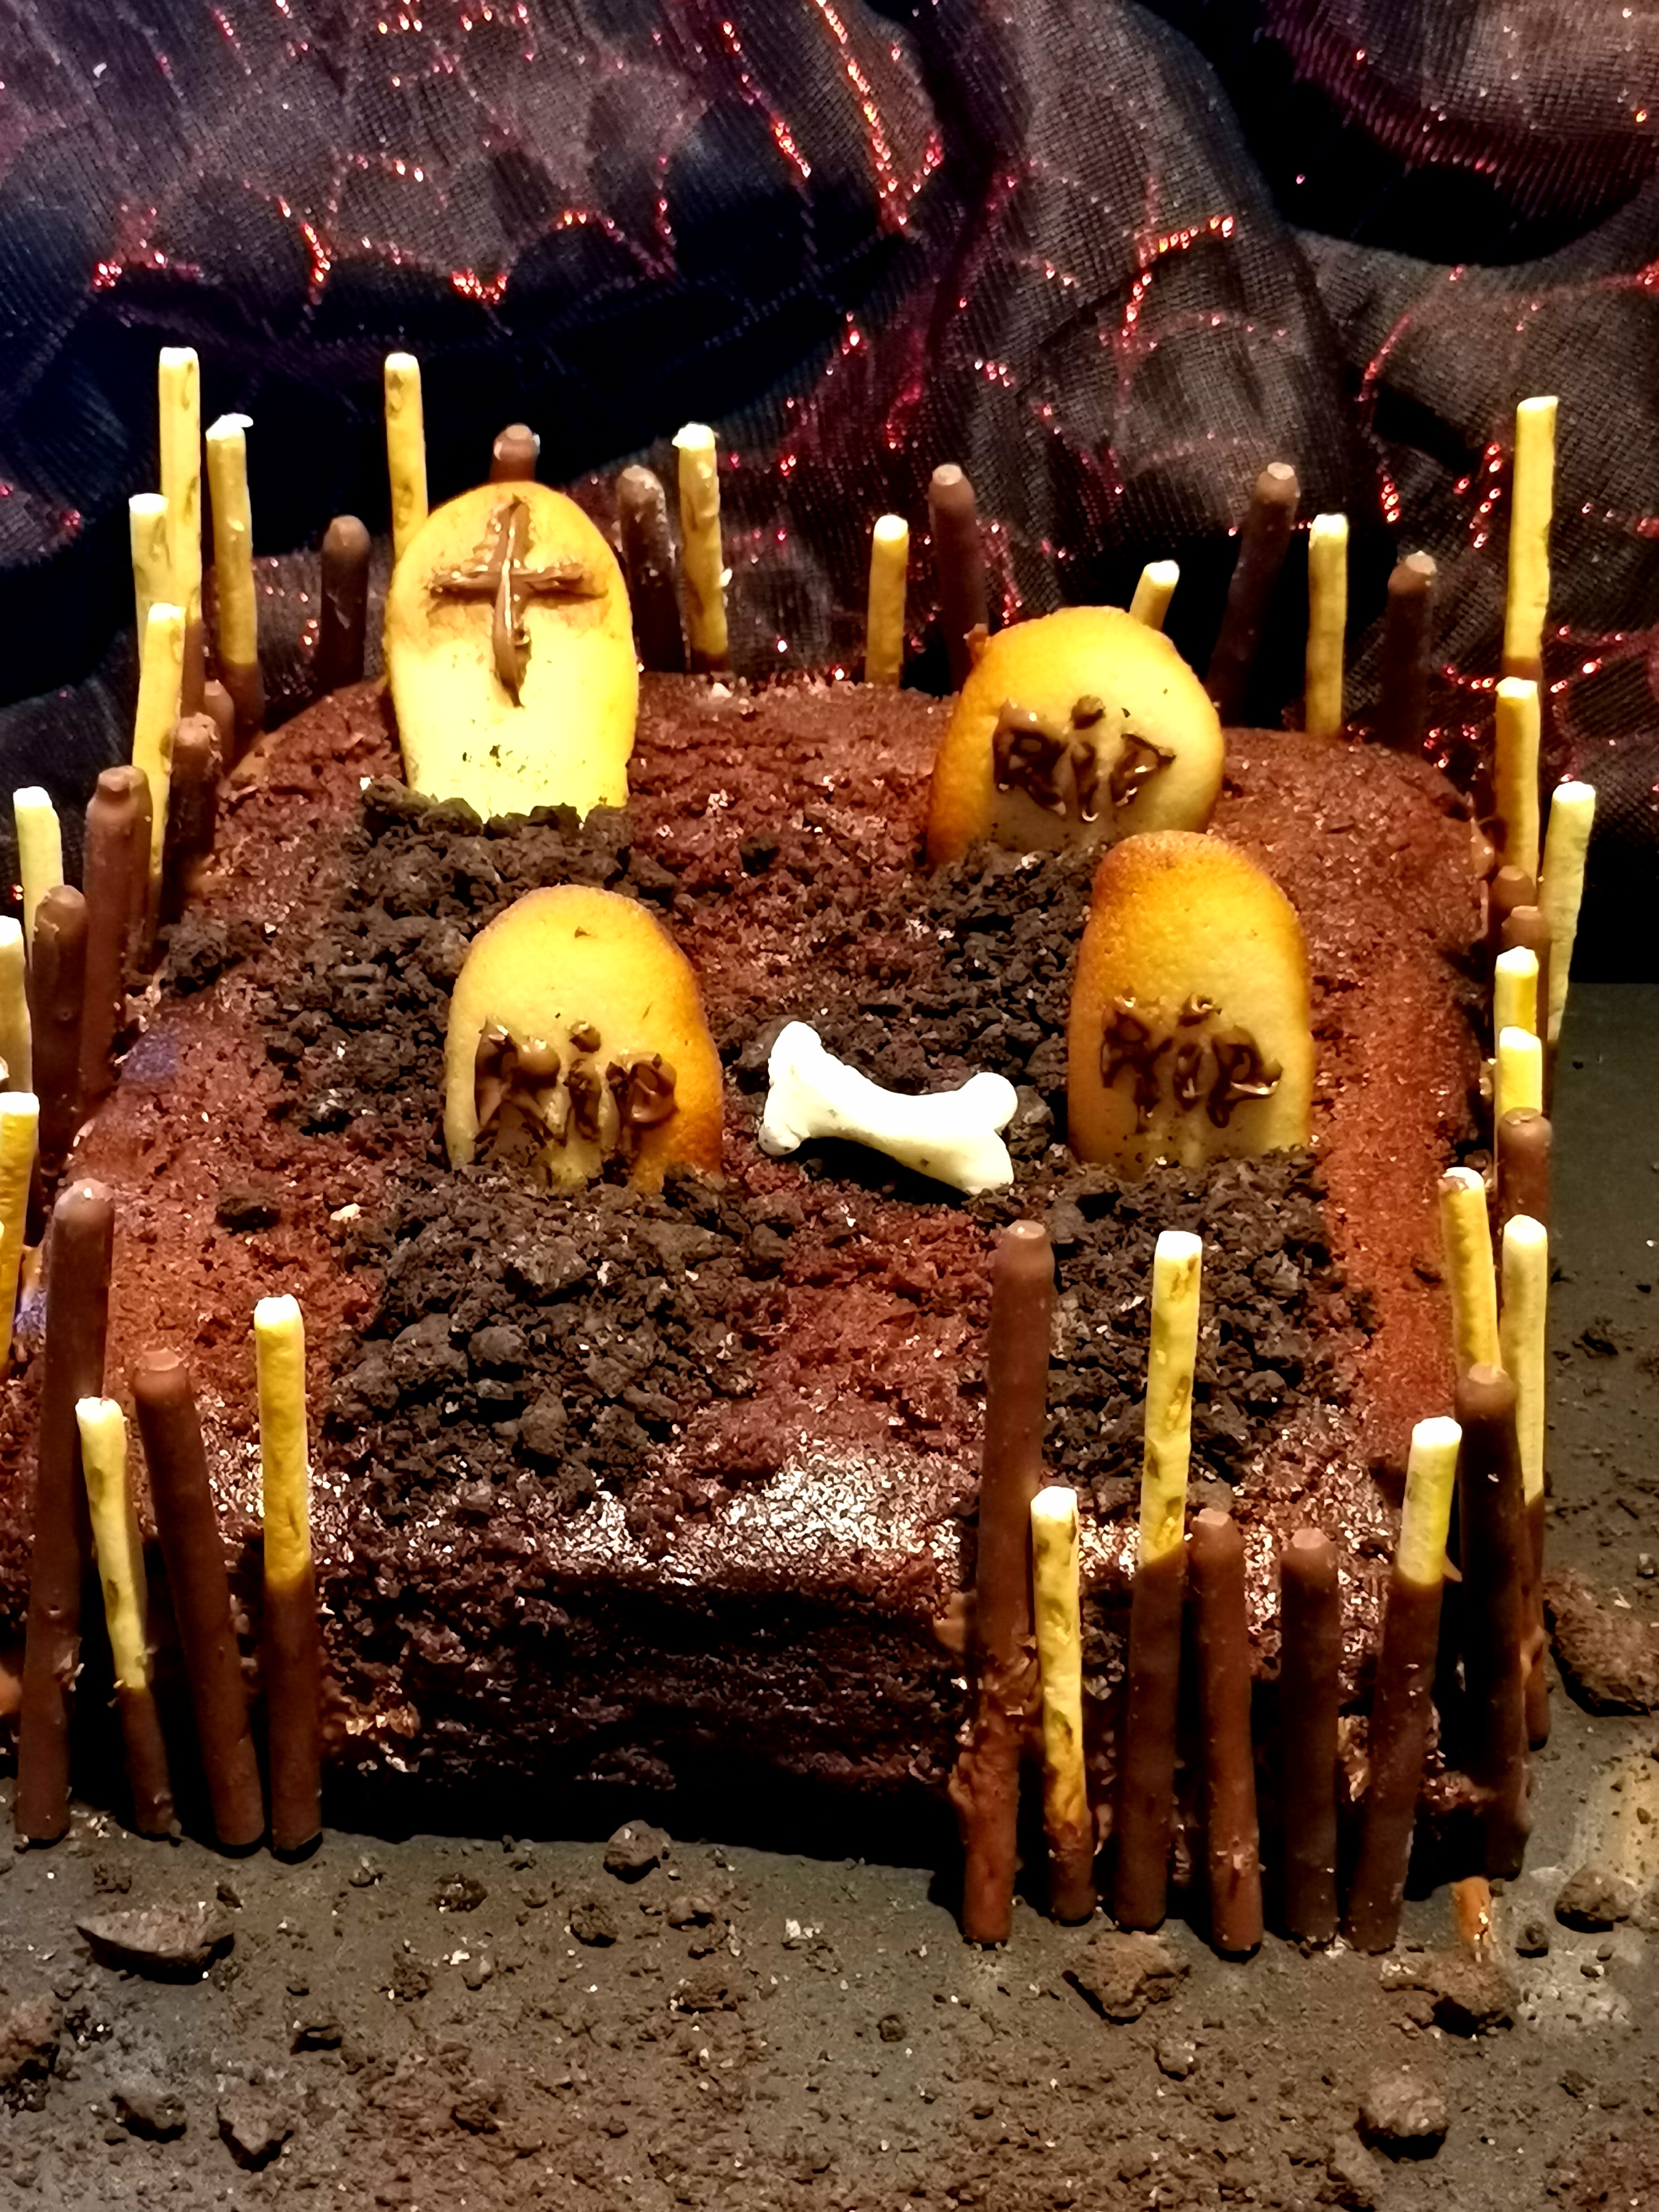 Gâteau cimetière d’Halloween au chocolat